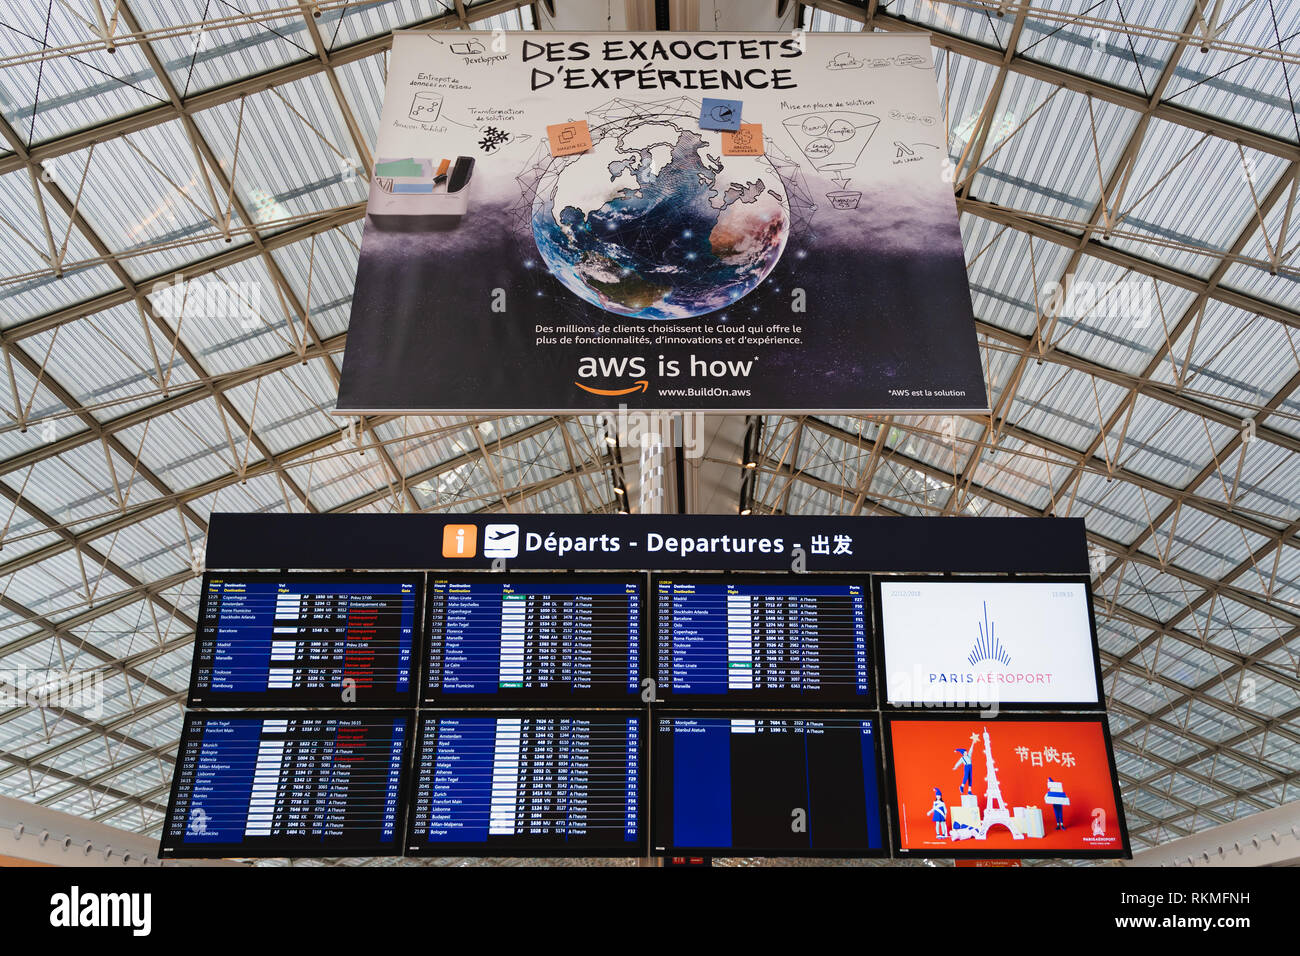 CDG Airport, Paris - 12/22/18: Departures information screen and aws amazon ad at Paris airport Charles de Gaule. buildon.aws Stock Photo